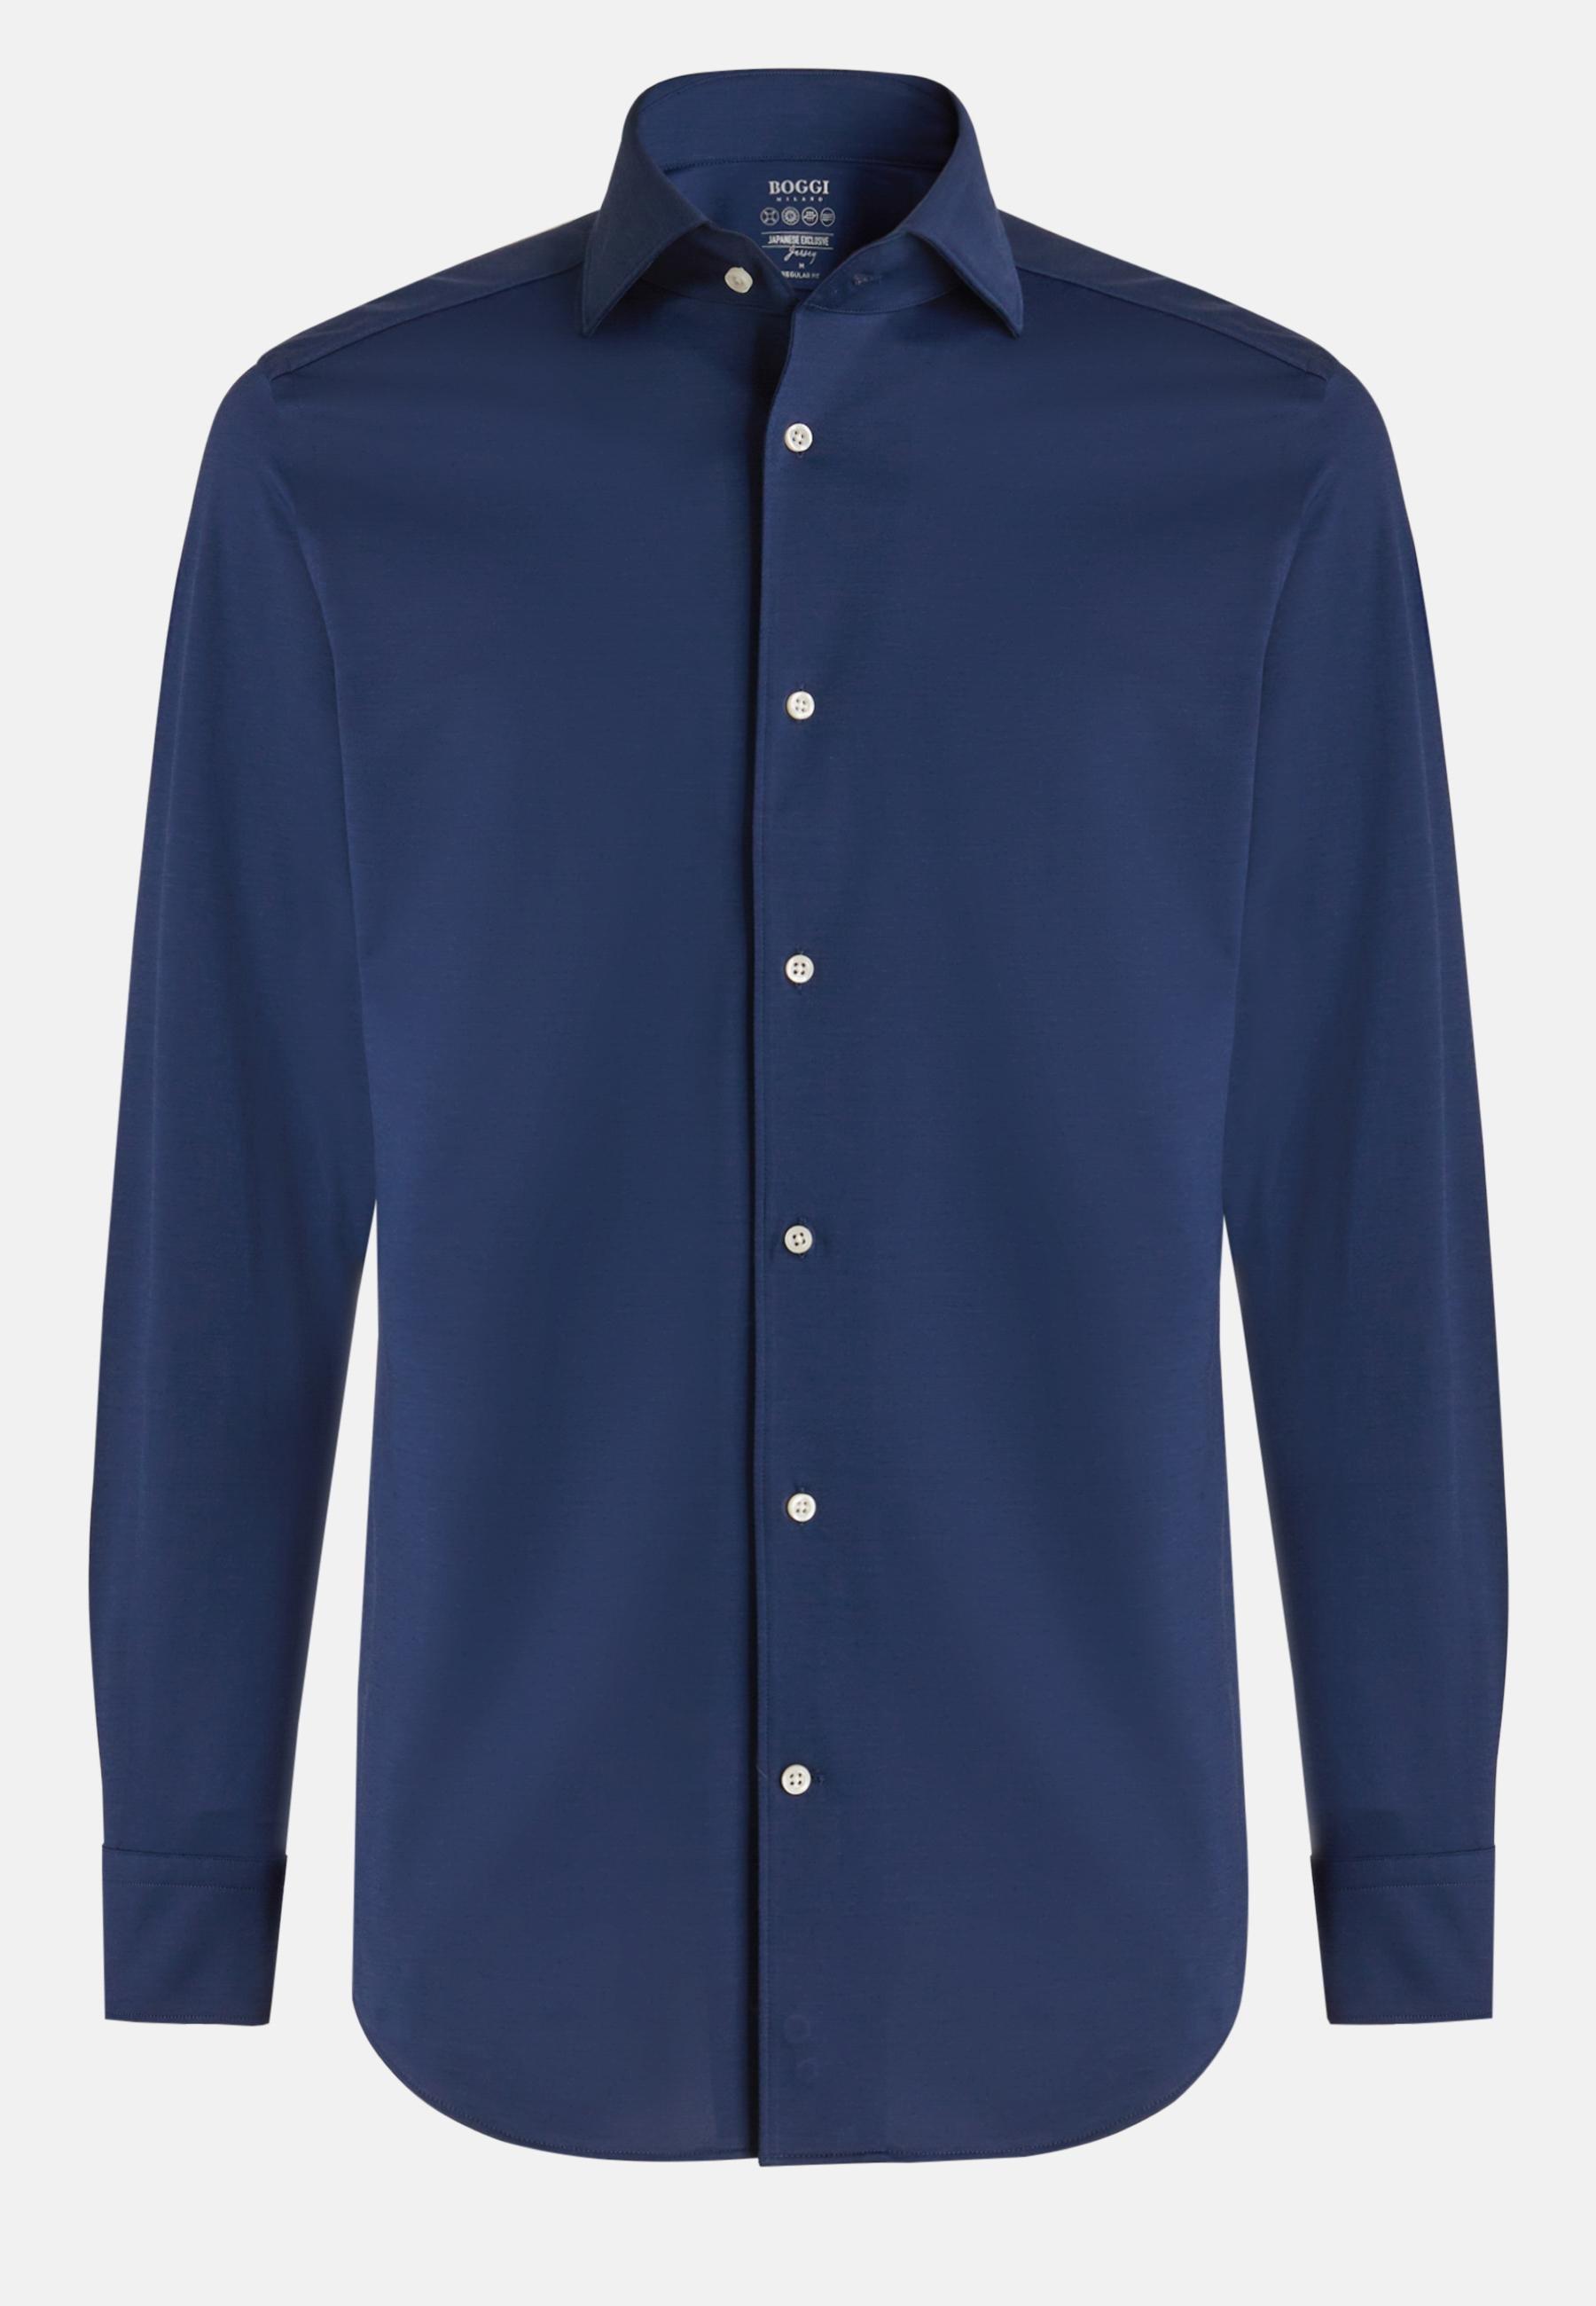 Boggi Milano - Blue Japanese Jersey Polo Shirt